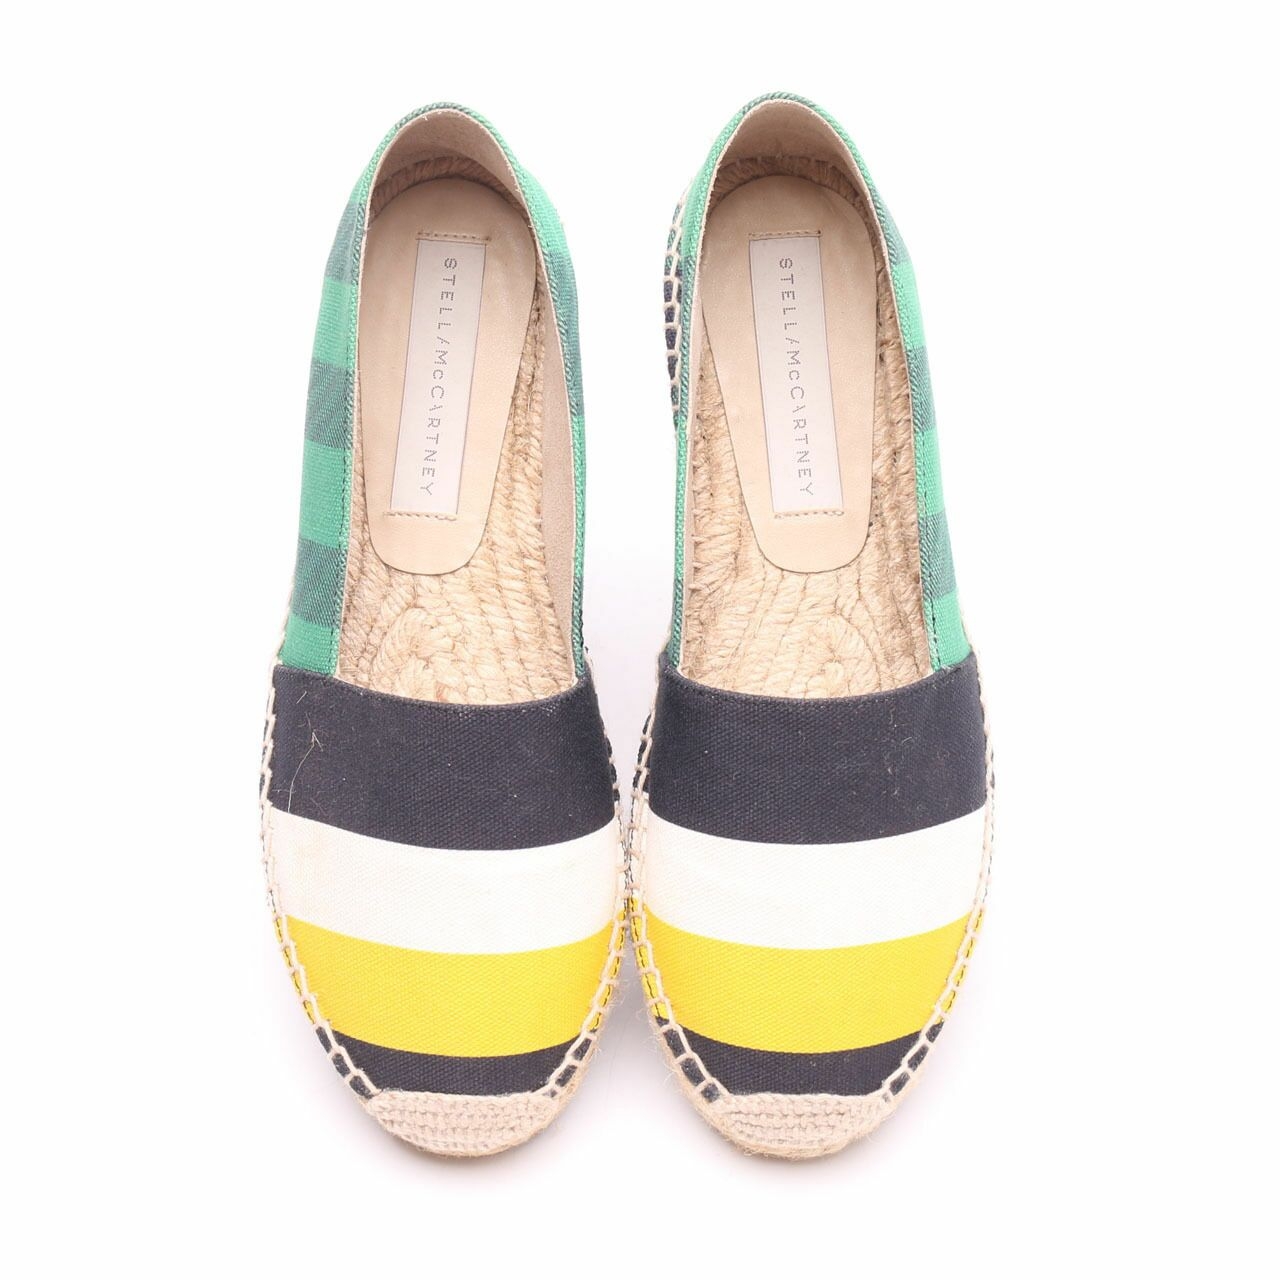 Stella Mccartney Stripes Multi Color Espadrilles Flat Shoes